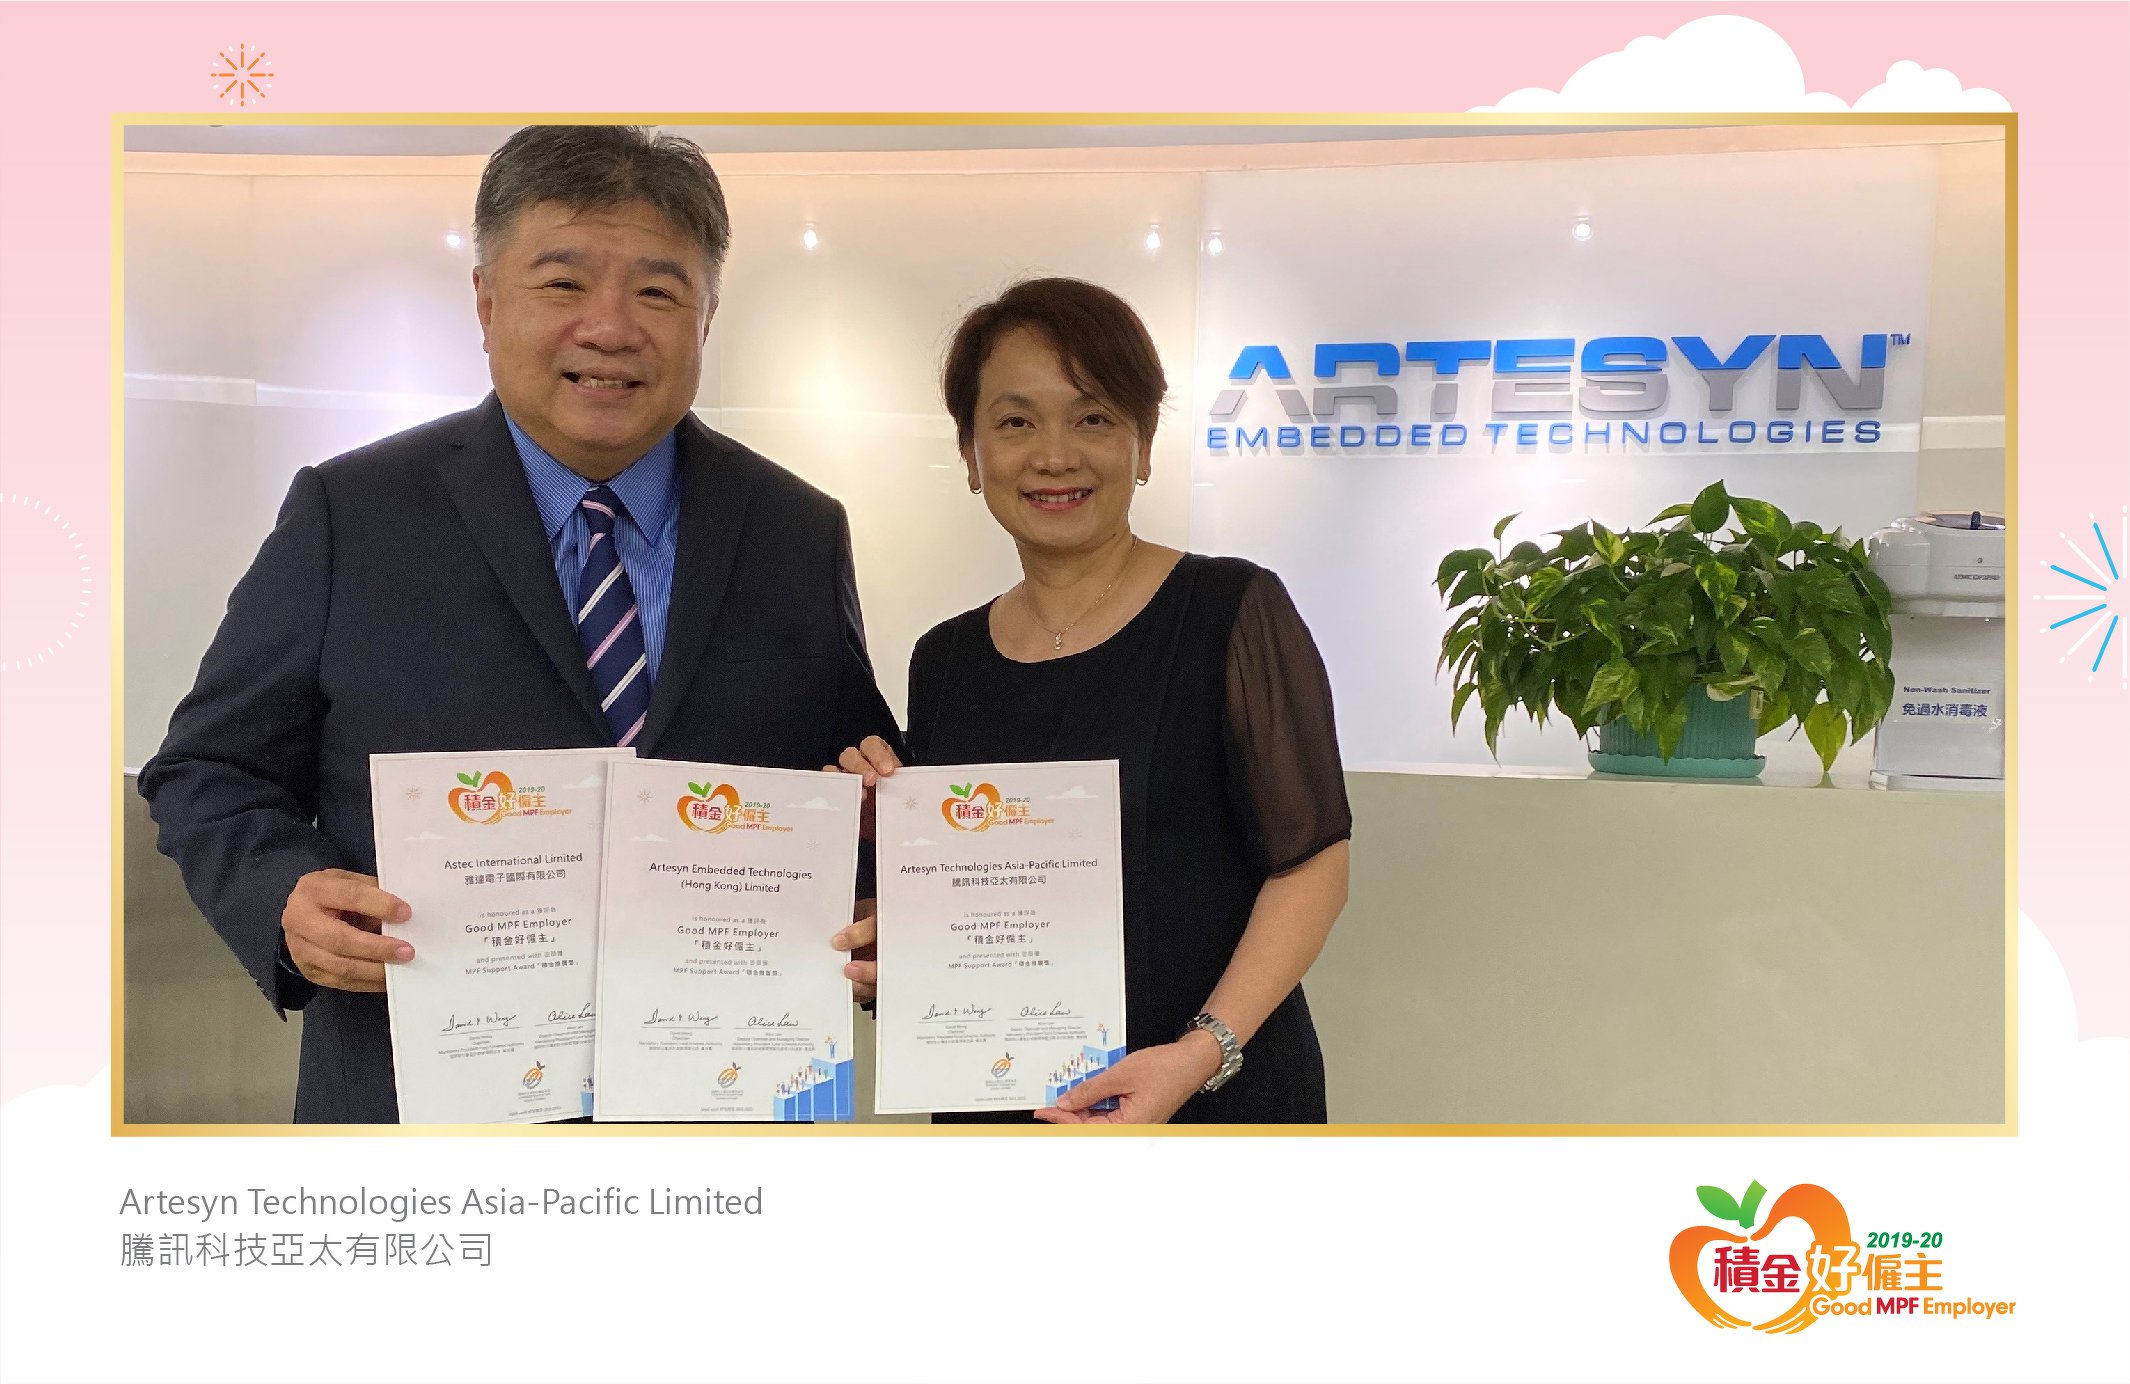 Artesyn Technologies Asia-Pacific Limited 騰訊科技亞太有限公司